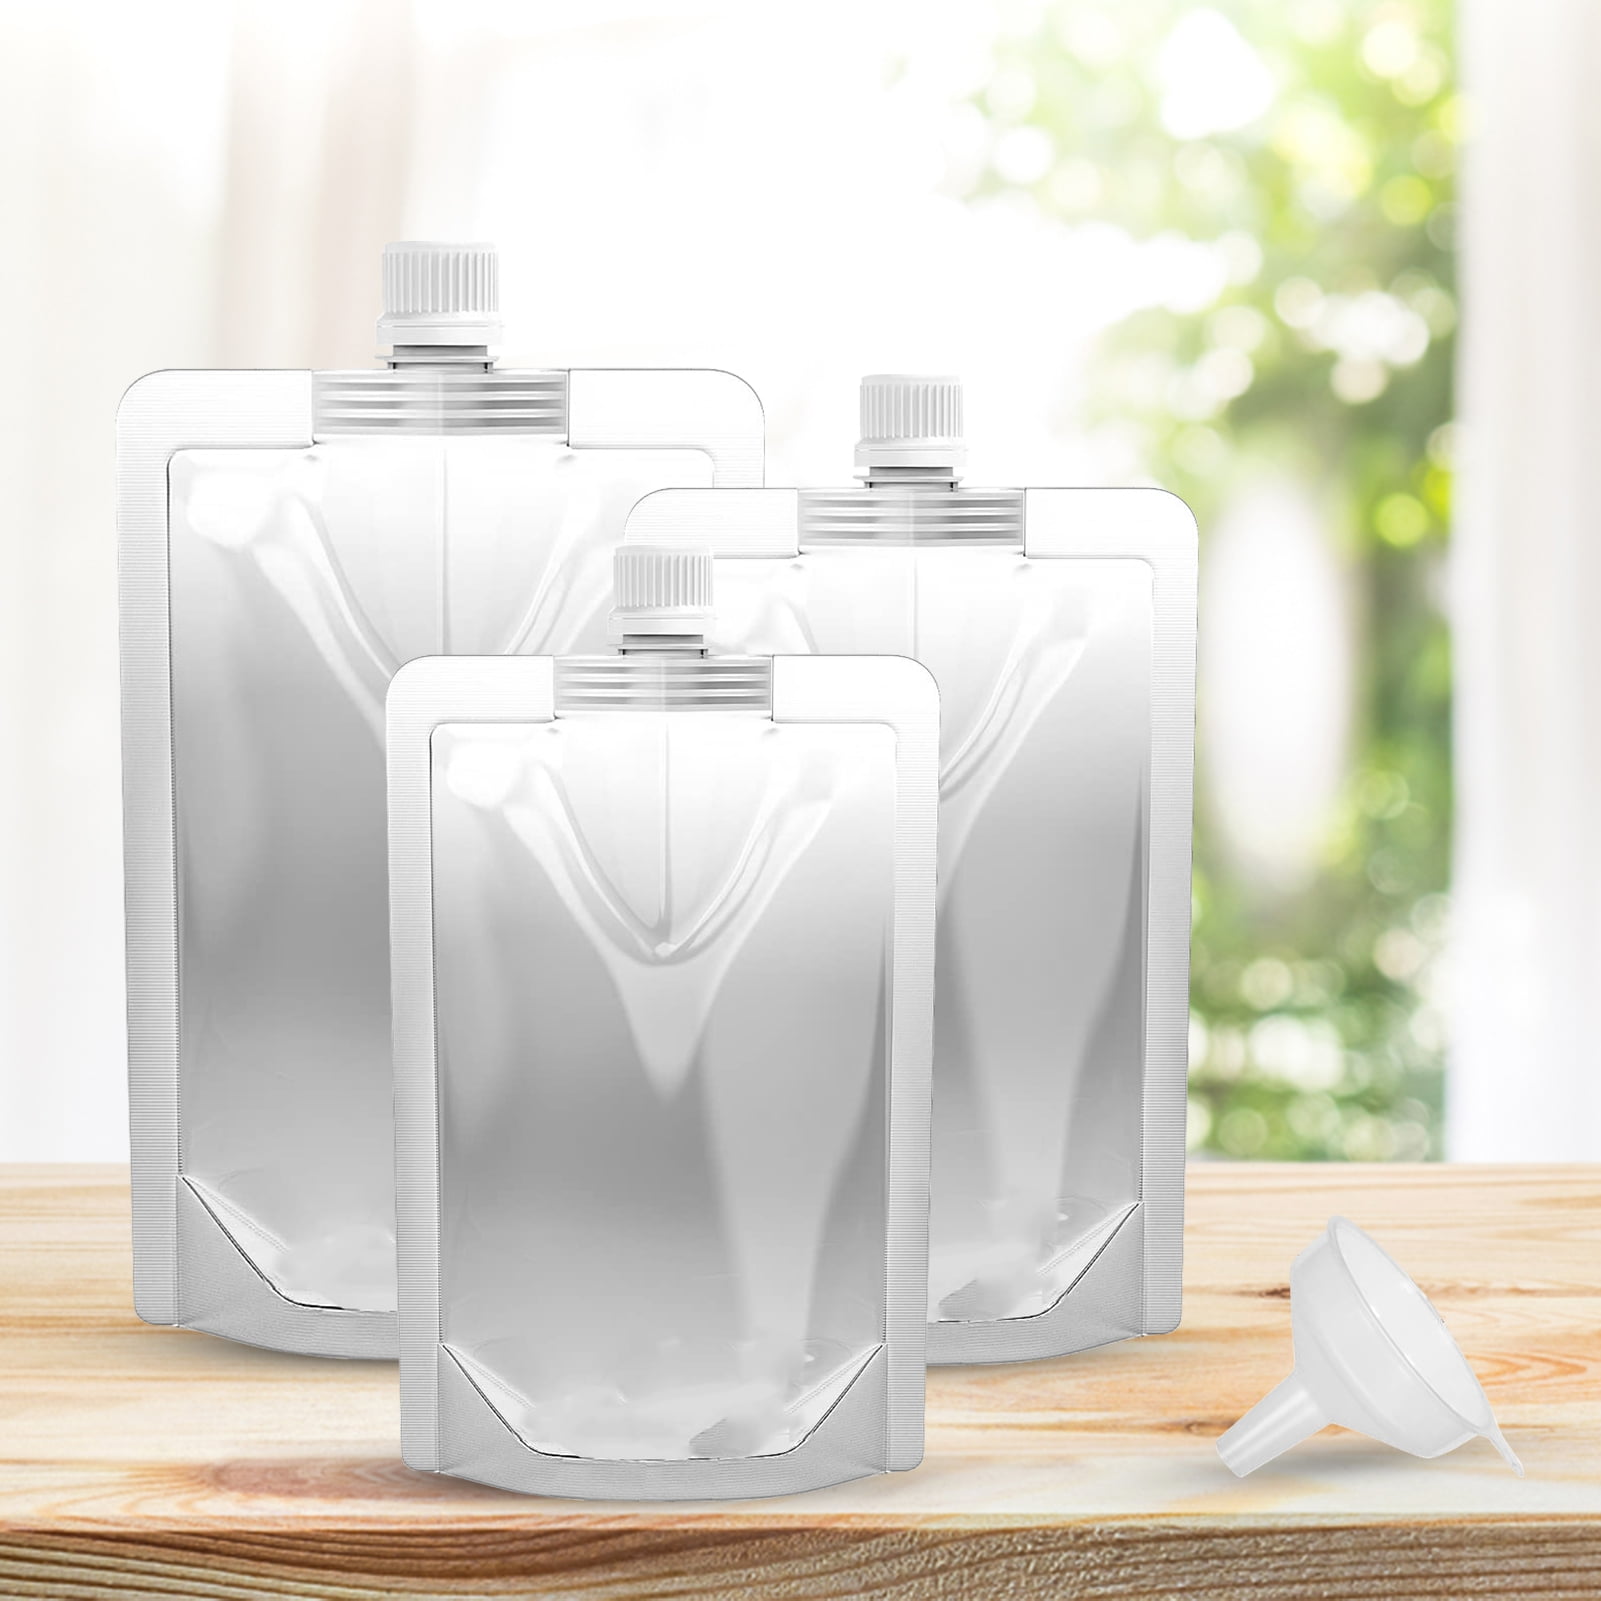 20 Pieces Plastic Flasks Reusable Liquor Drink Juice Pouches with Spout  Concealable Drinking Flasks Bags Adults Sneak Alcohol Water Bottle 250ml 